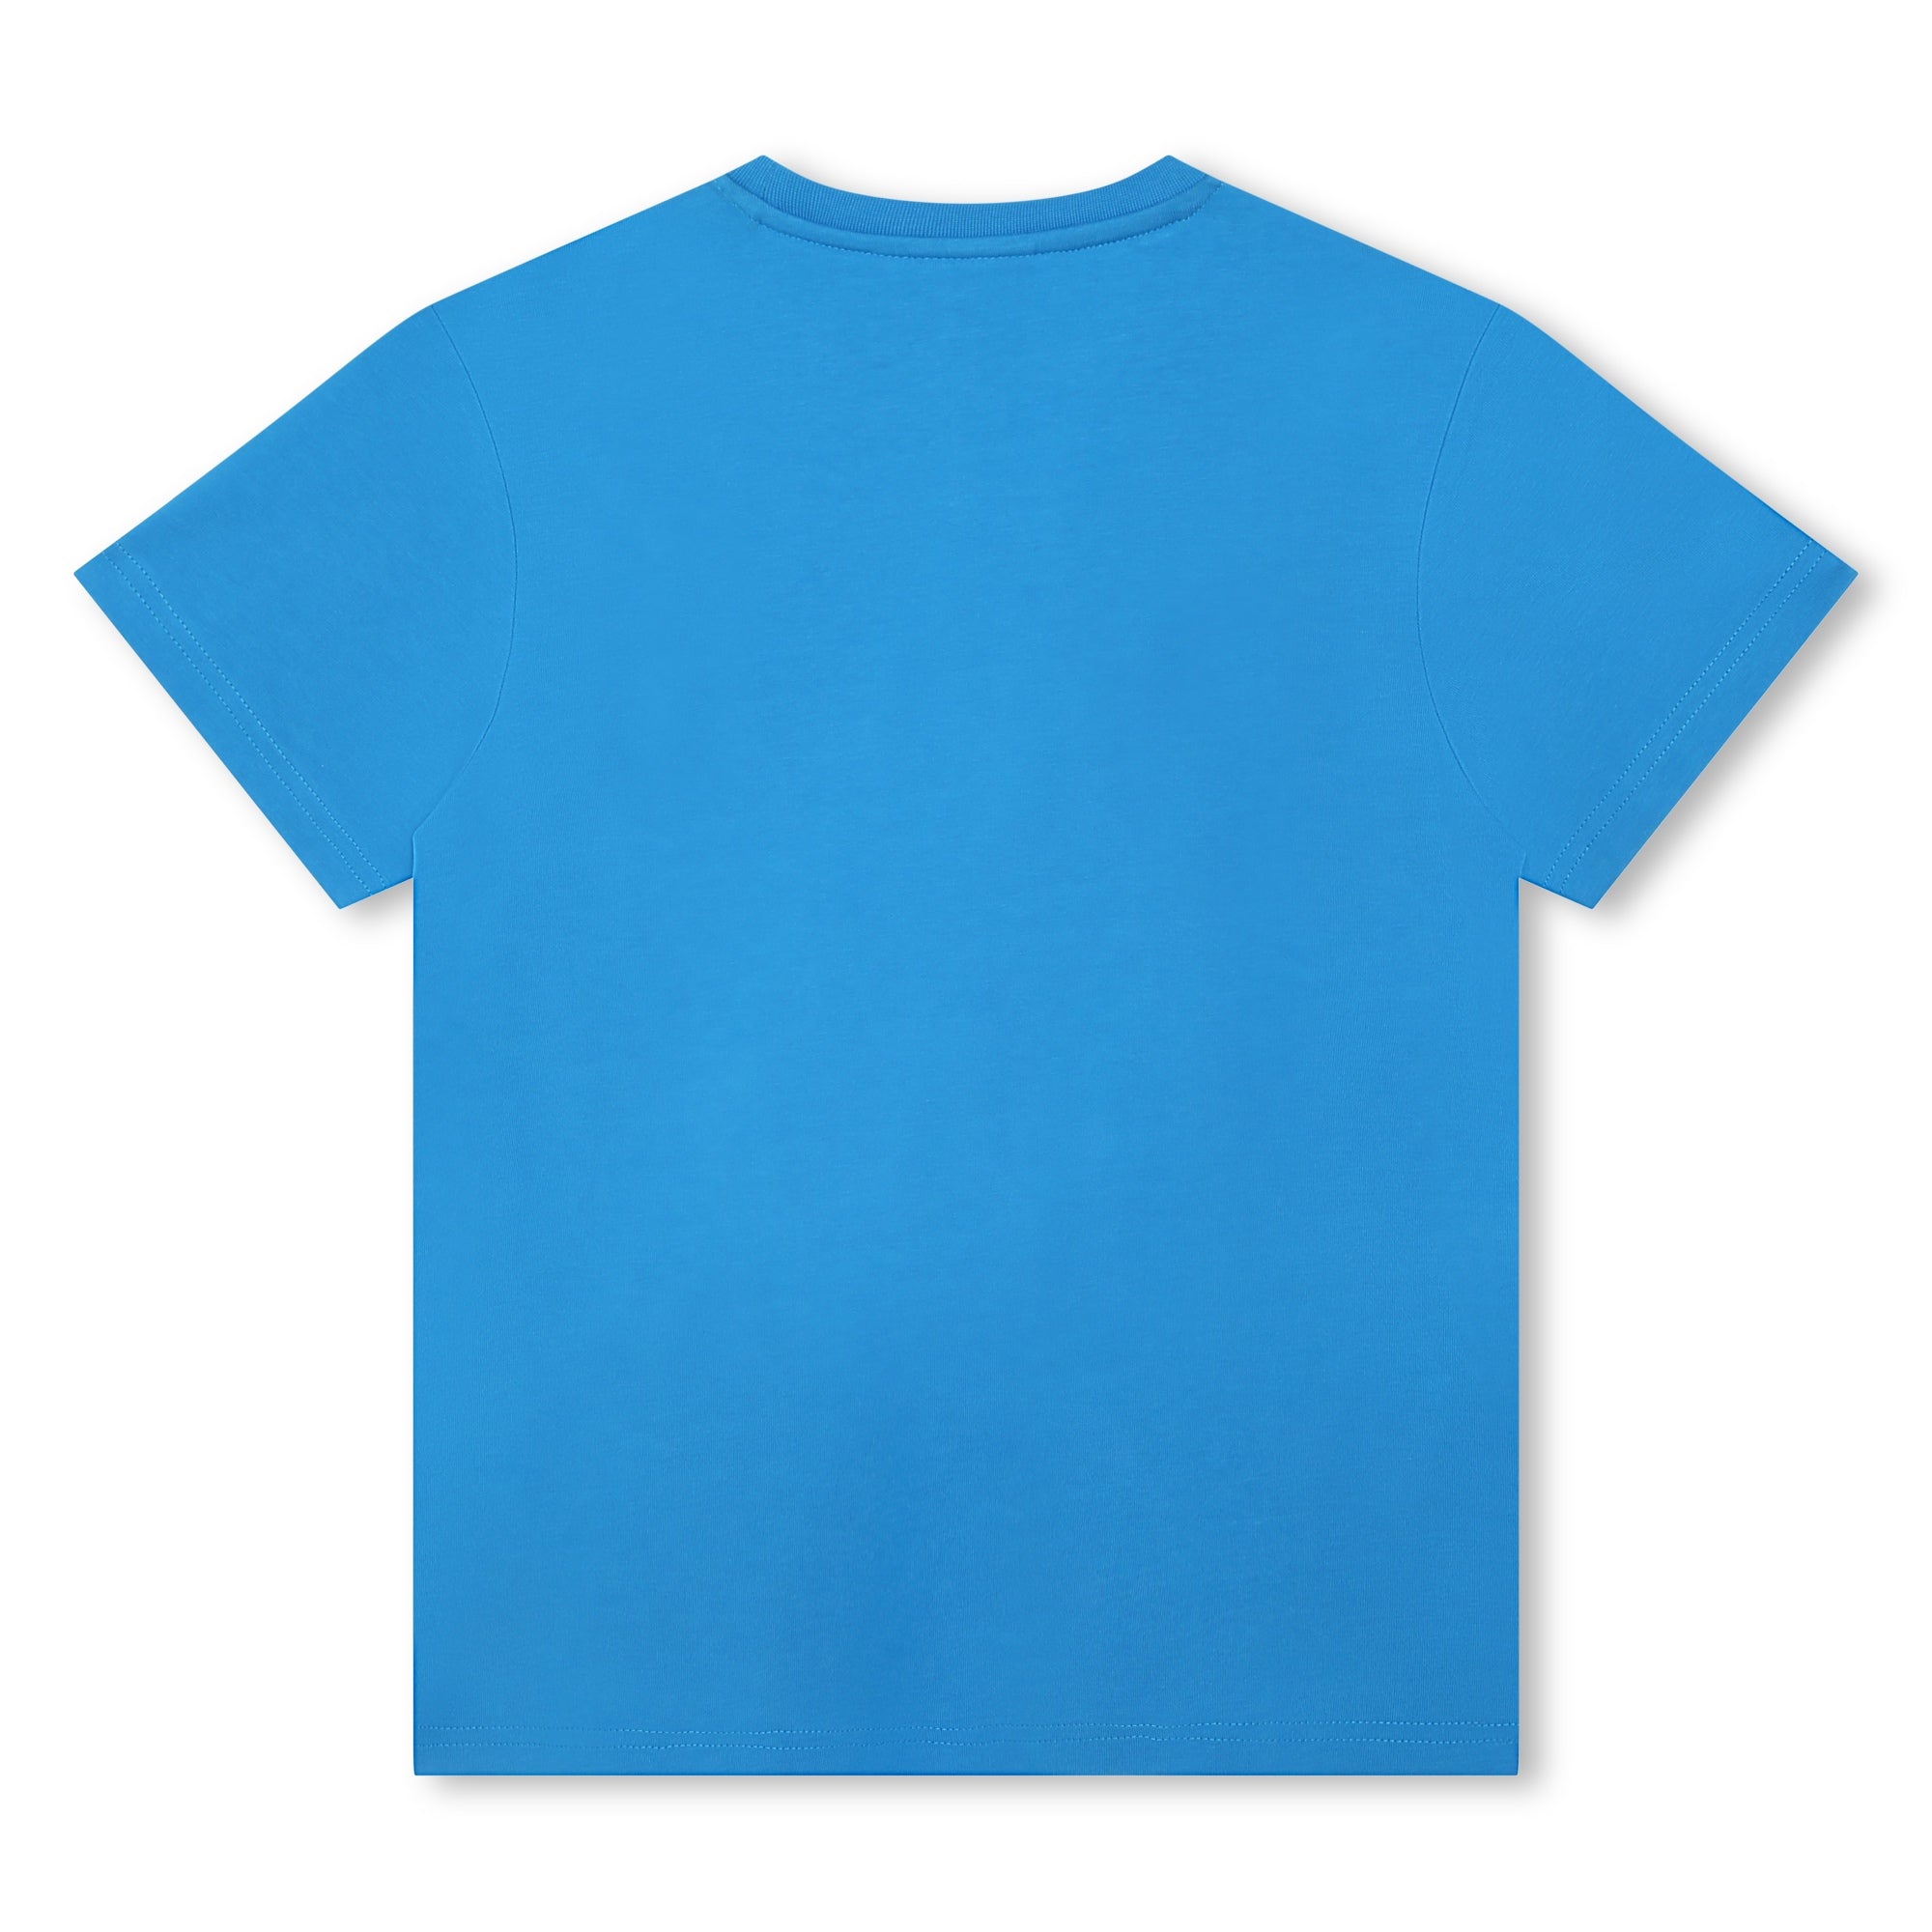 Hugo Navy Electric Blue T-Shirt